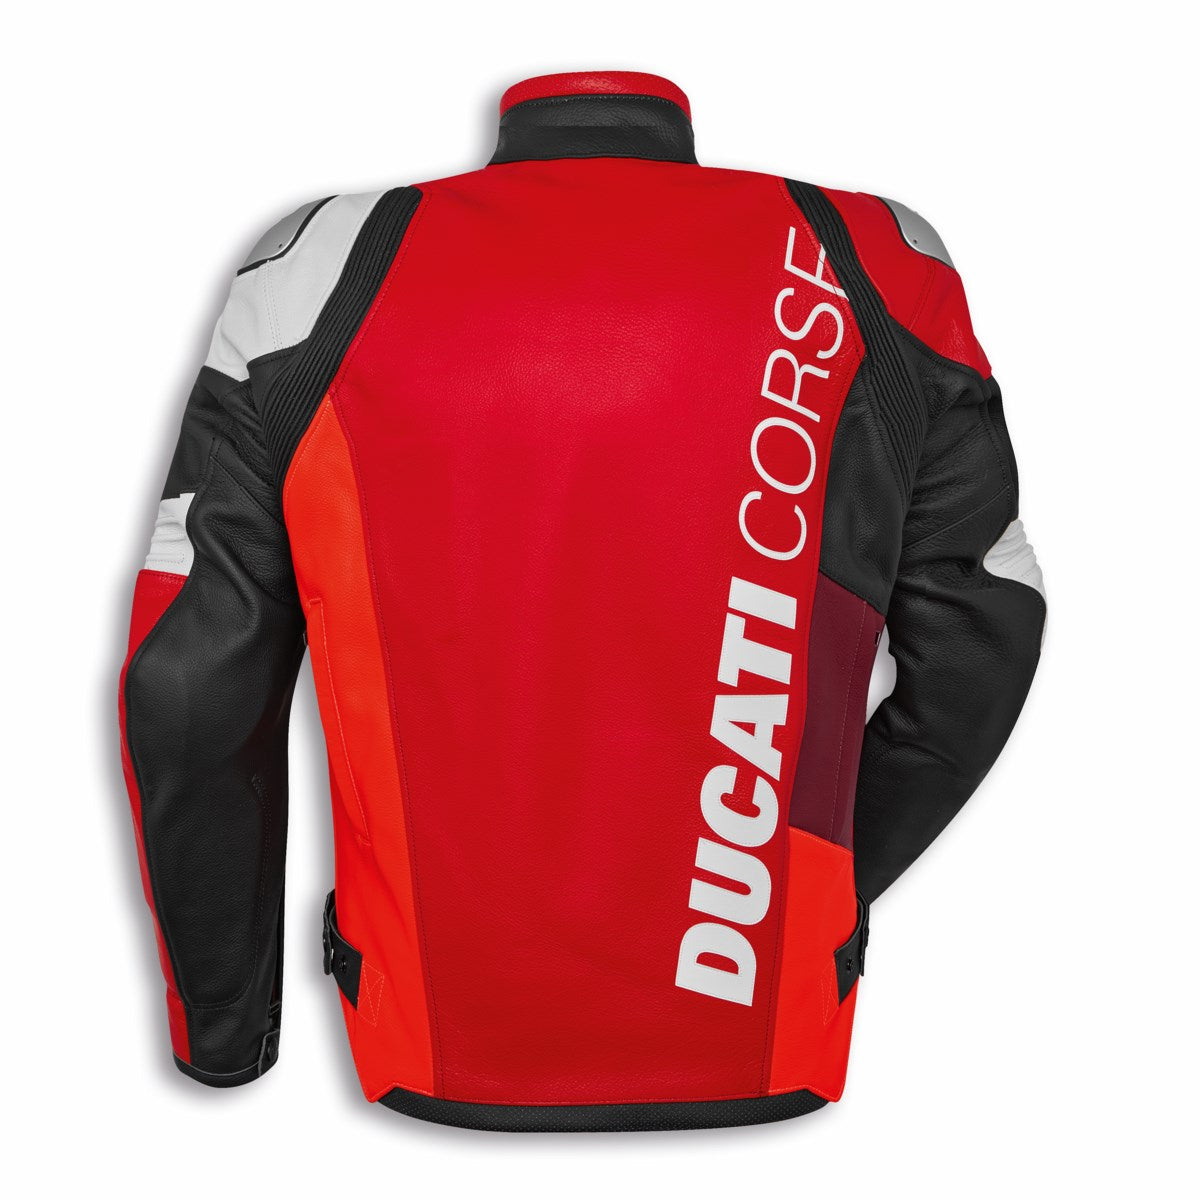 Ducati Corse C6 Leather Jacket